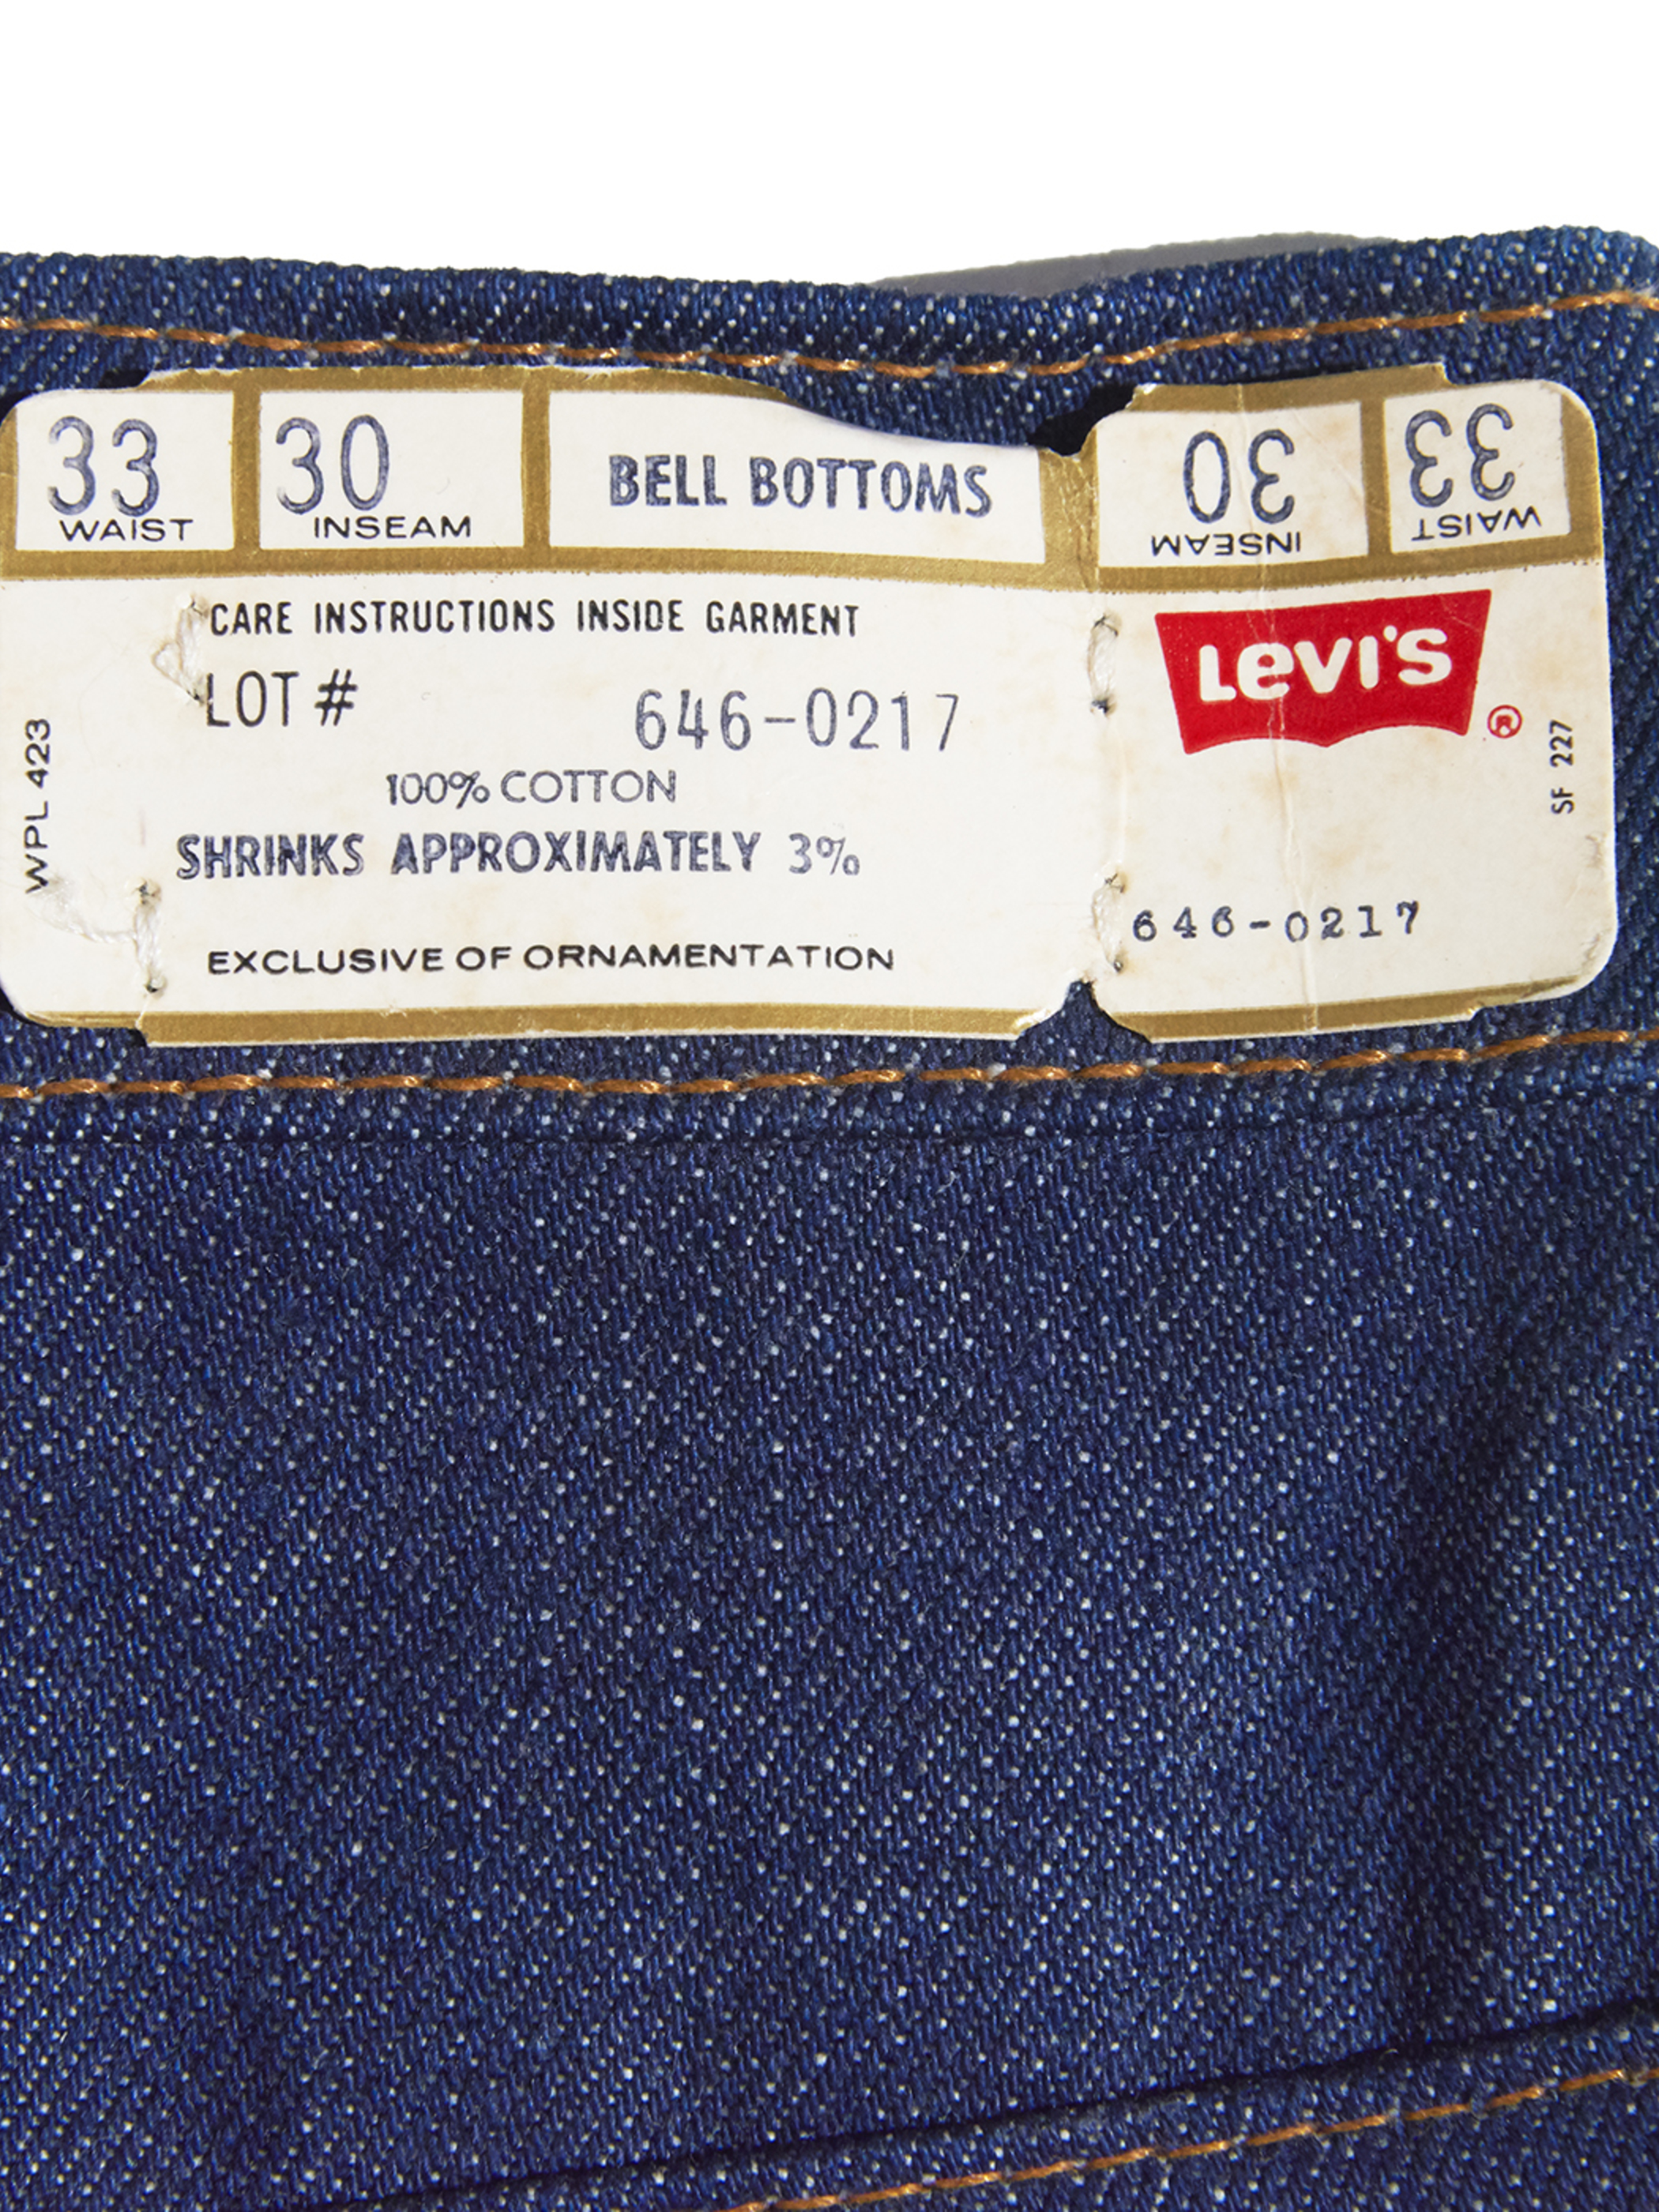 NOS 1980s "Levi's" Lot.646 denim pants -INDIGO-